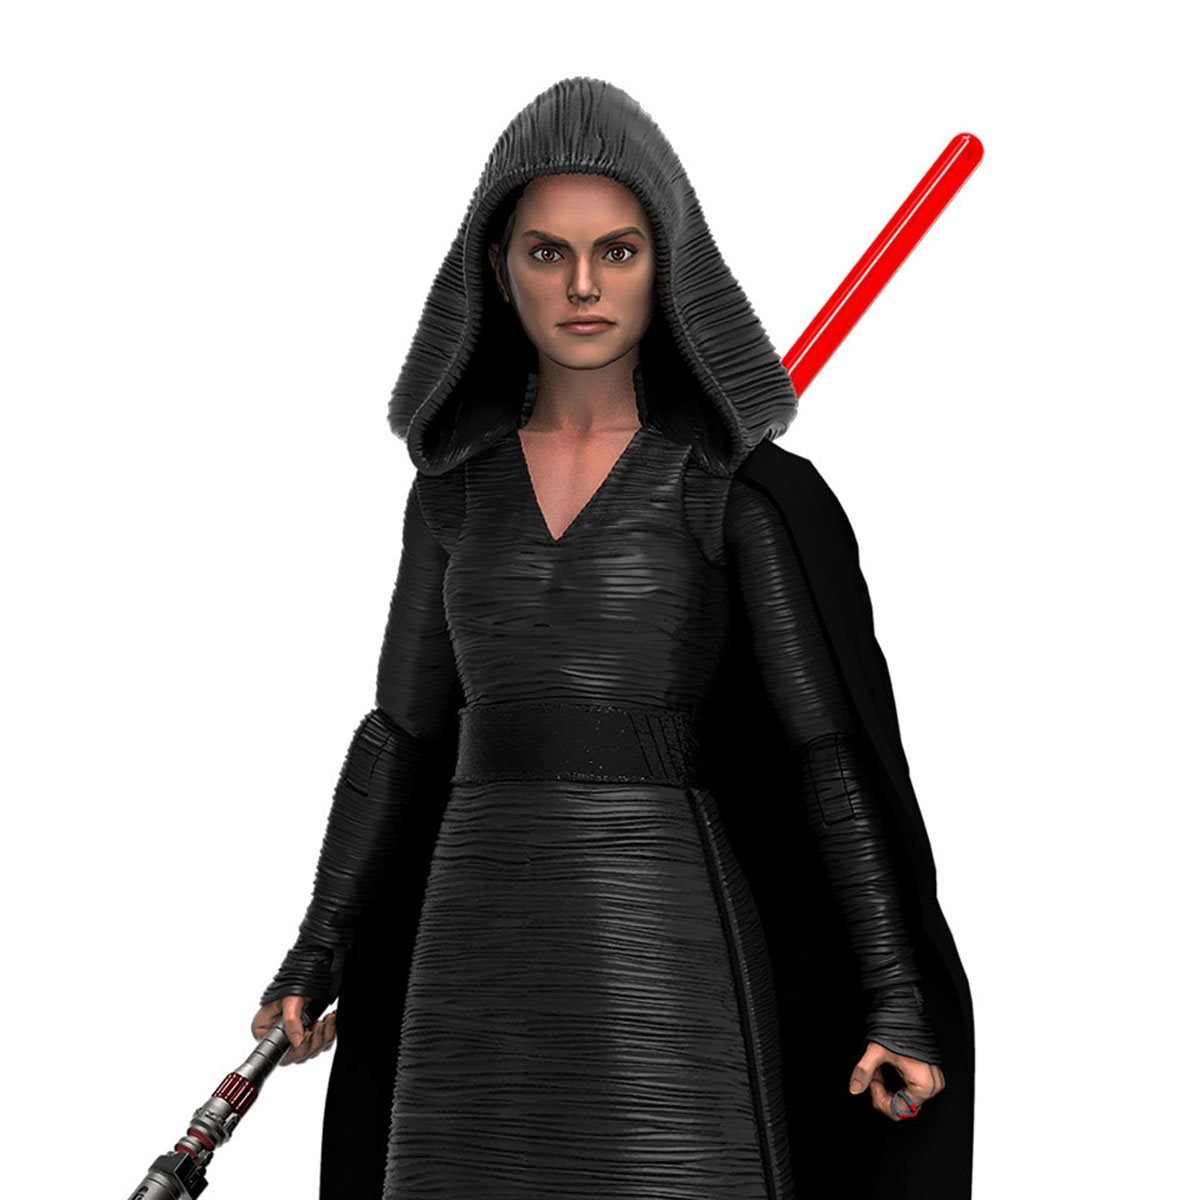 Star Wars The Black Series Dark Side Rey Action Figure for sale online 